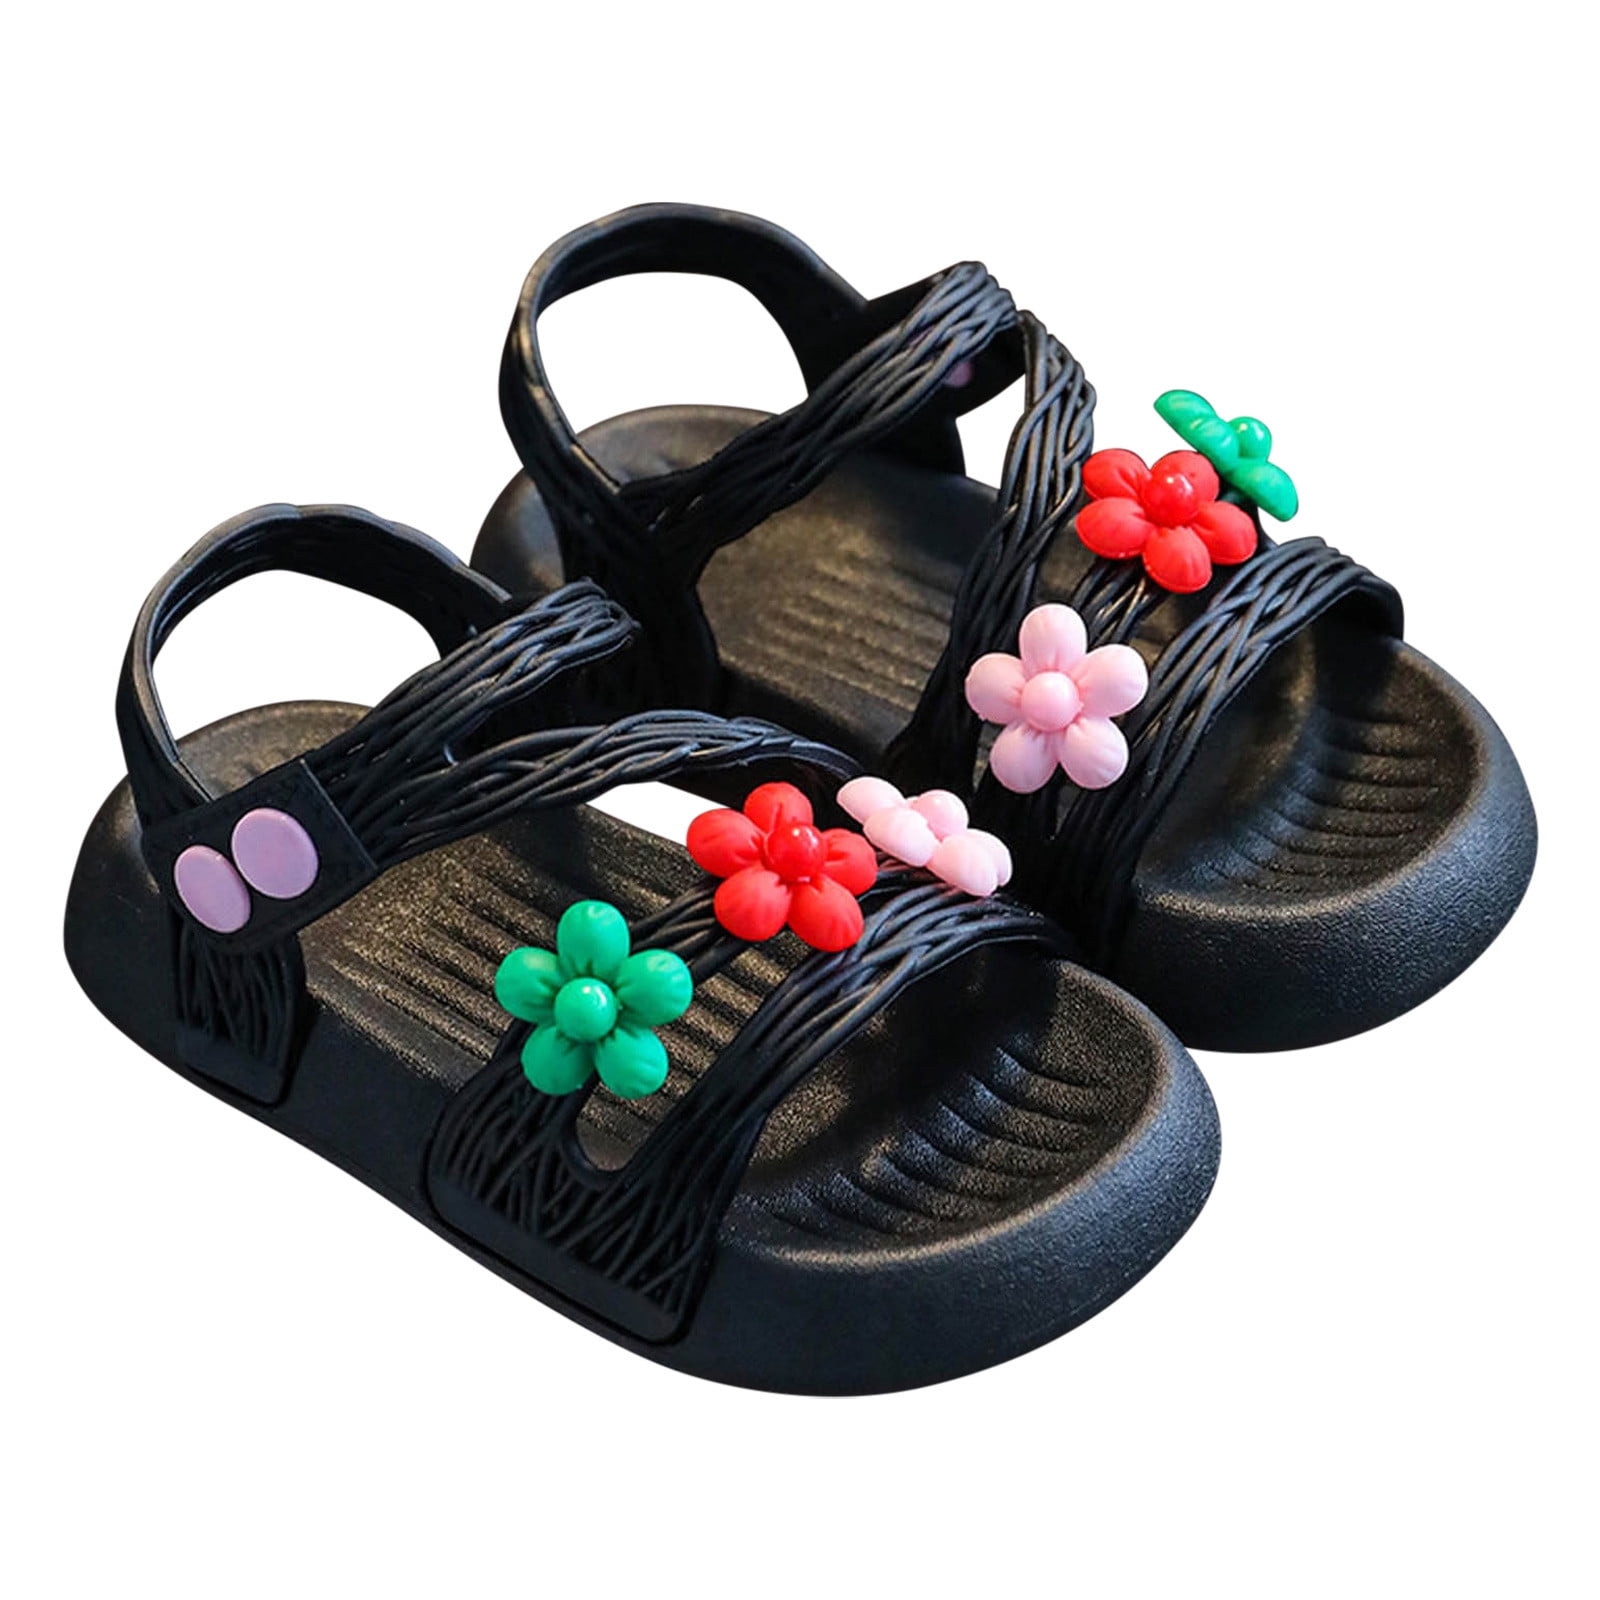 Facrlt Girls' Summer Anti-skid Soft Soles Sandals Children's Flower ...